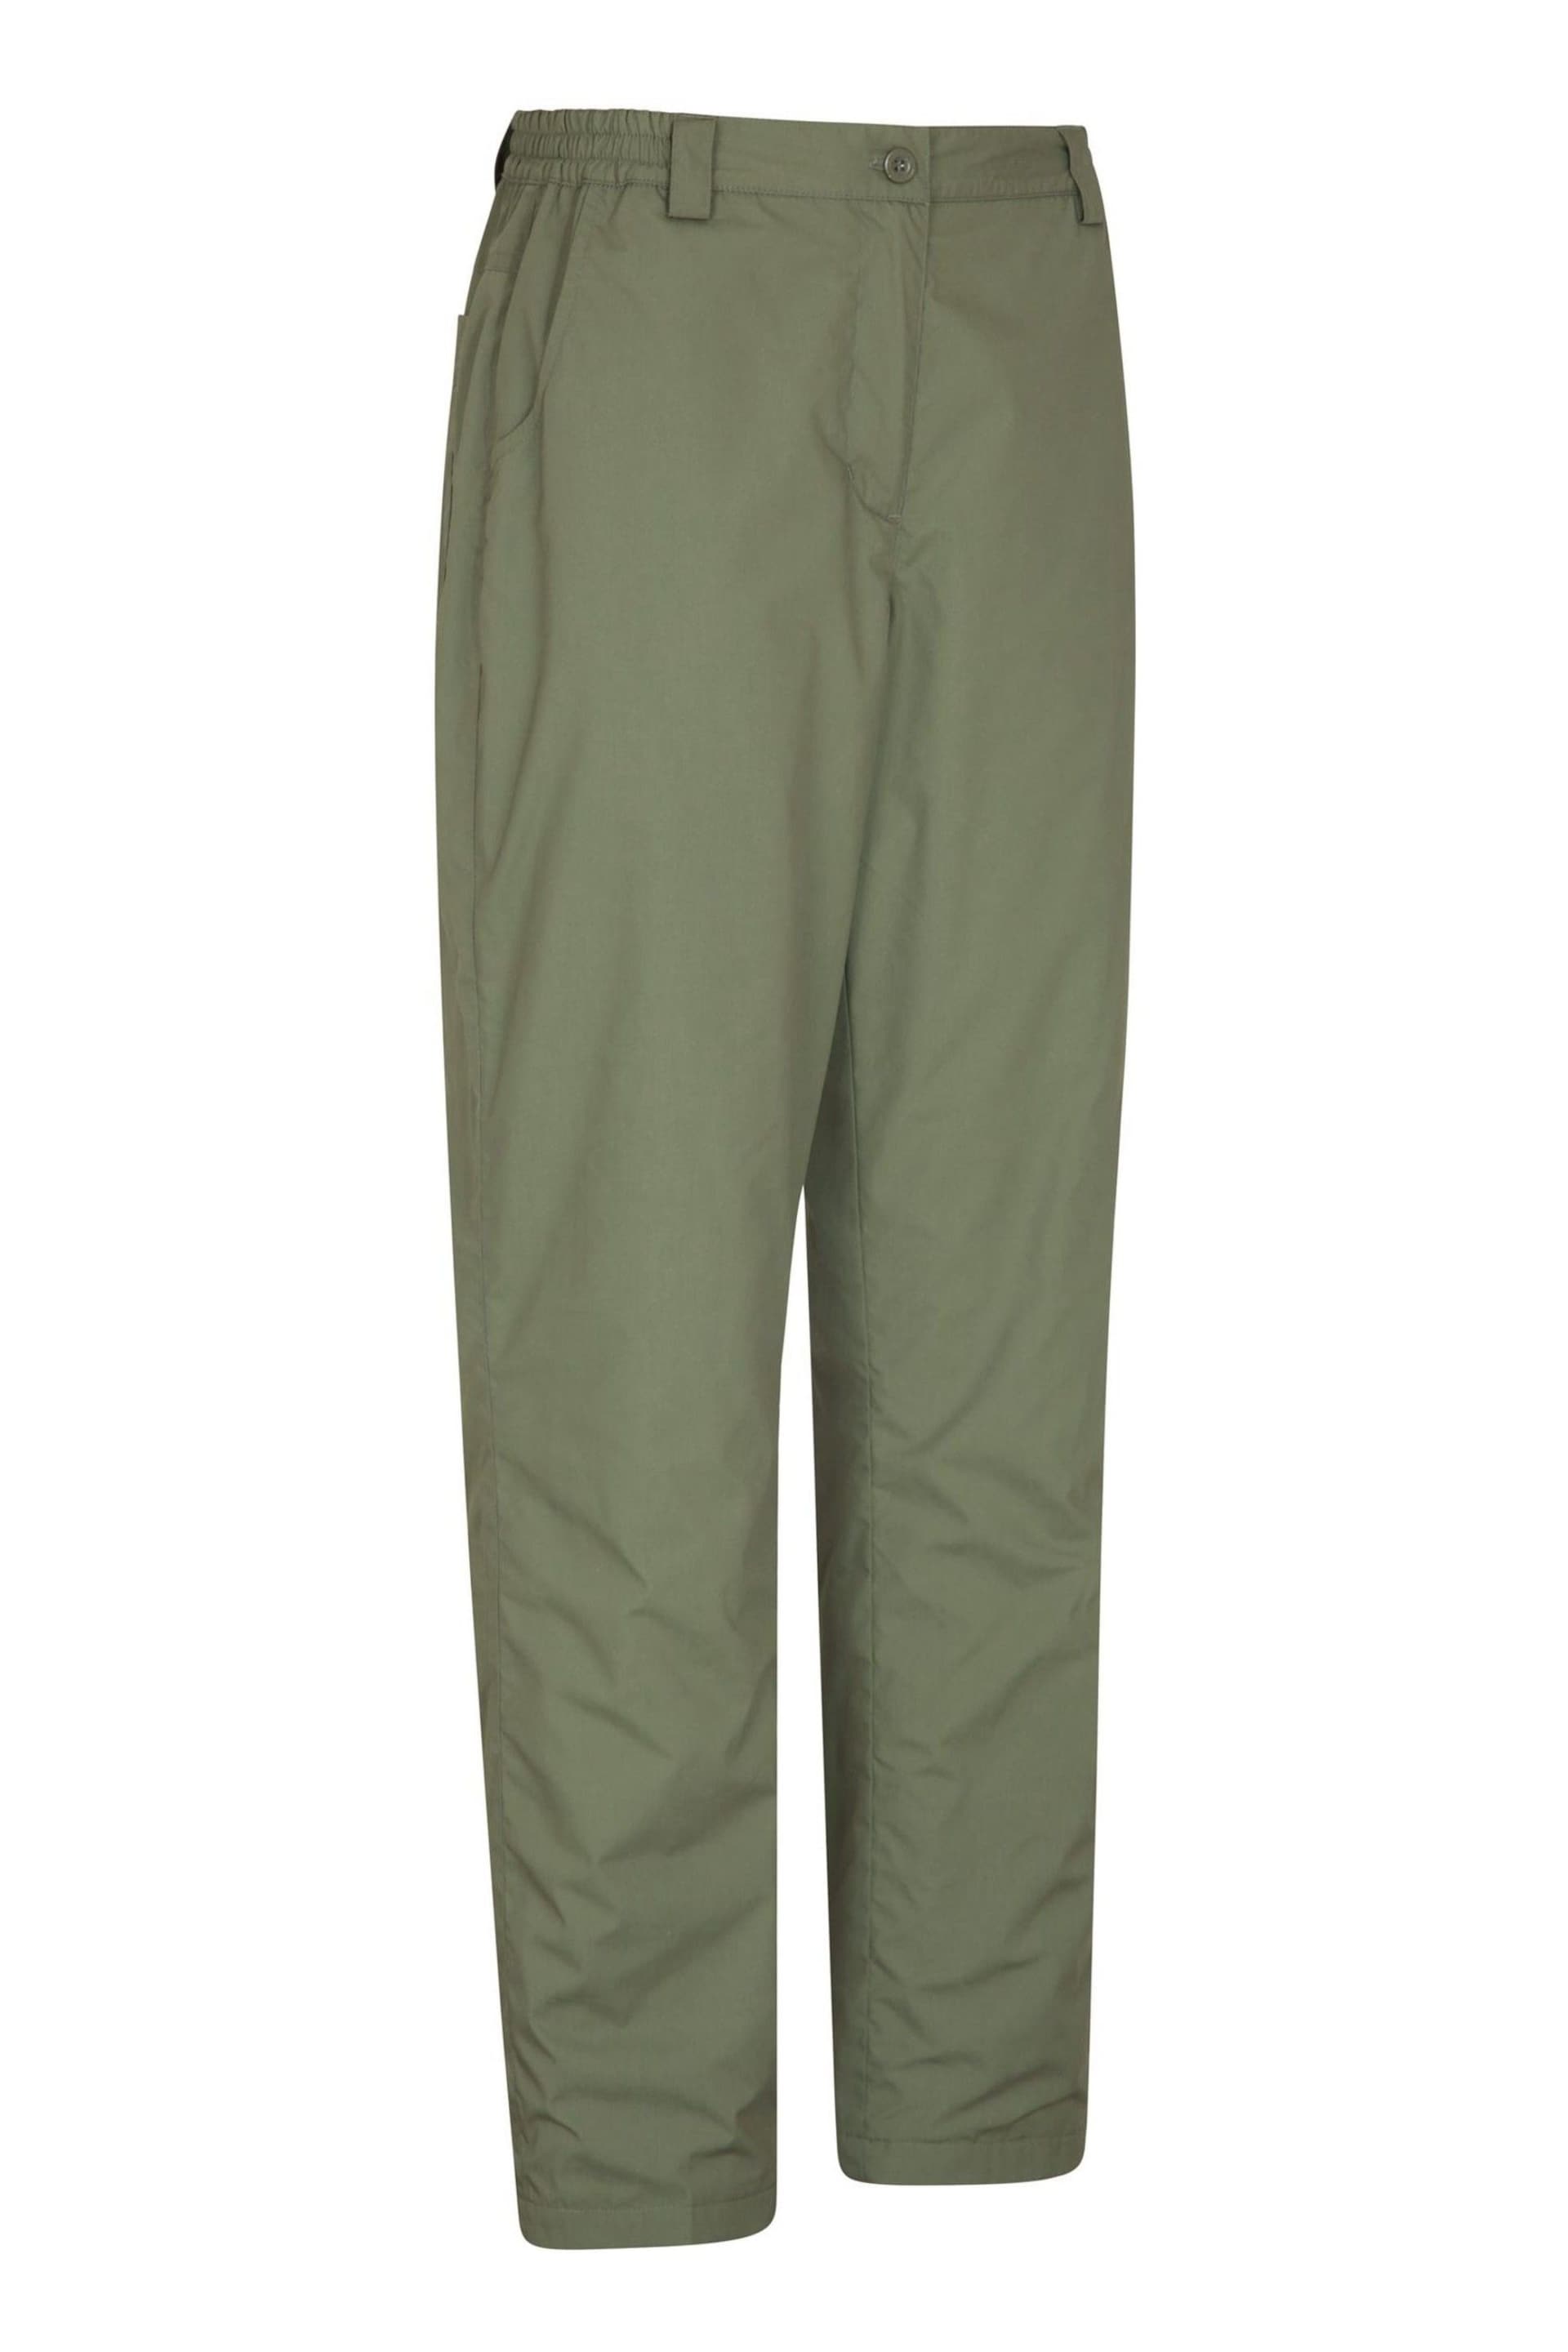 Mountain Warehouse Khaki Green Winter Trek Ii Womens Short Length Trousers - Image 2 of 5